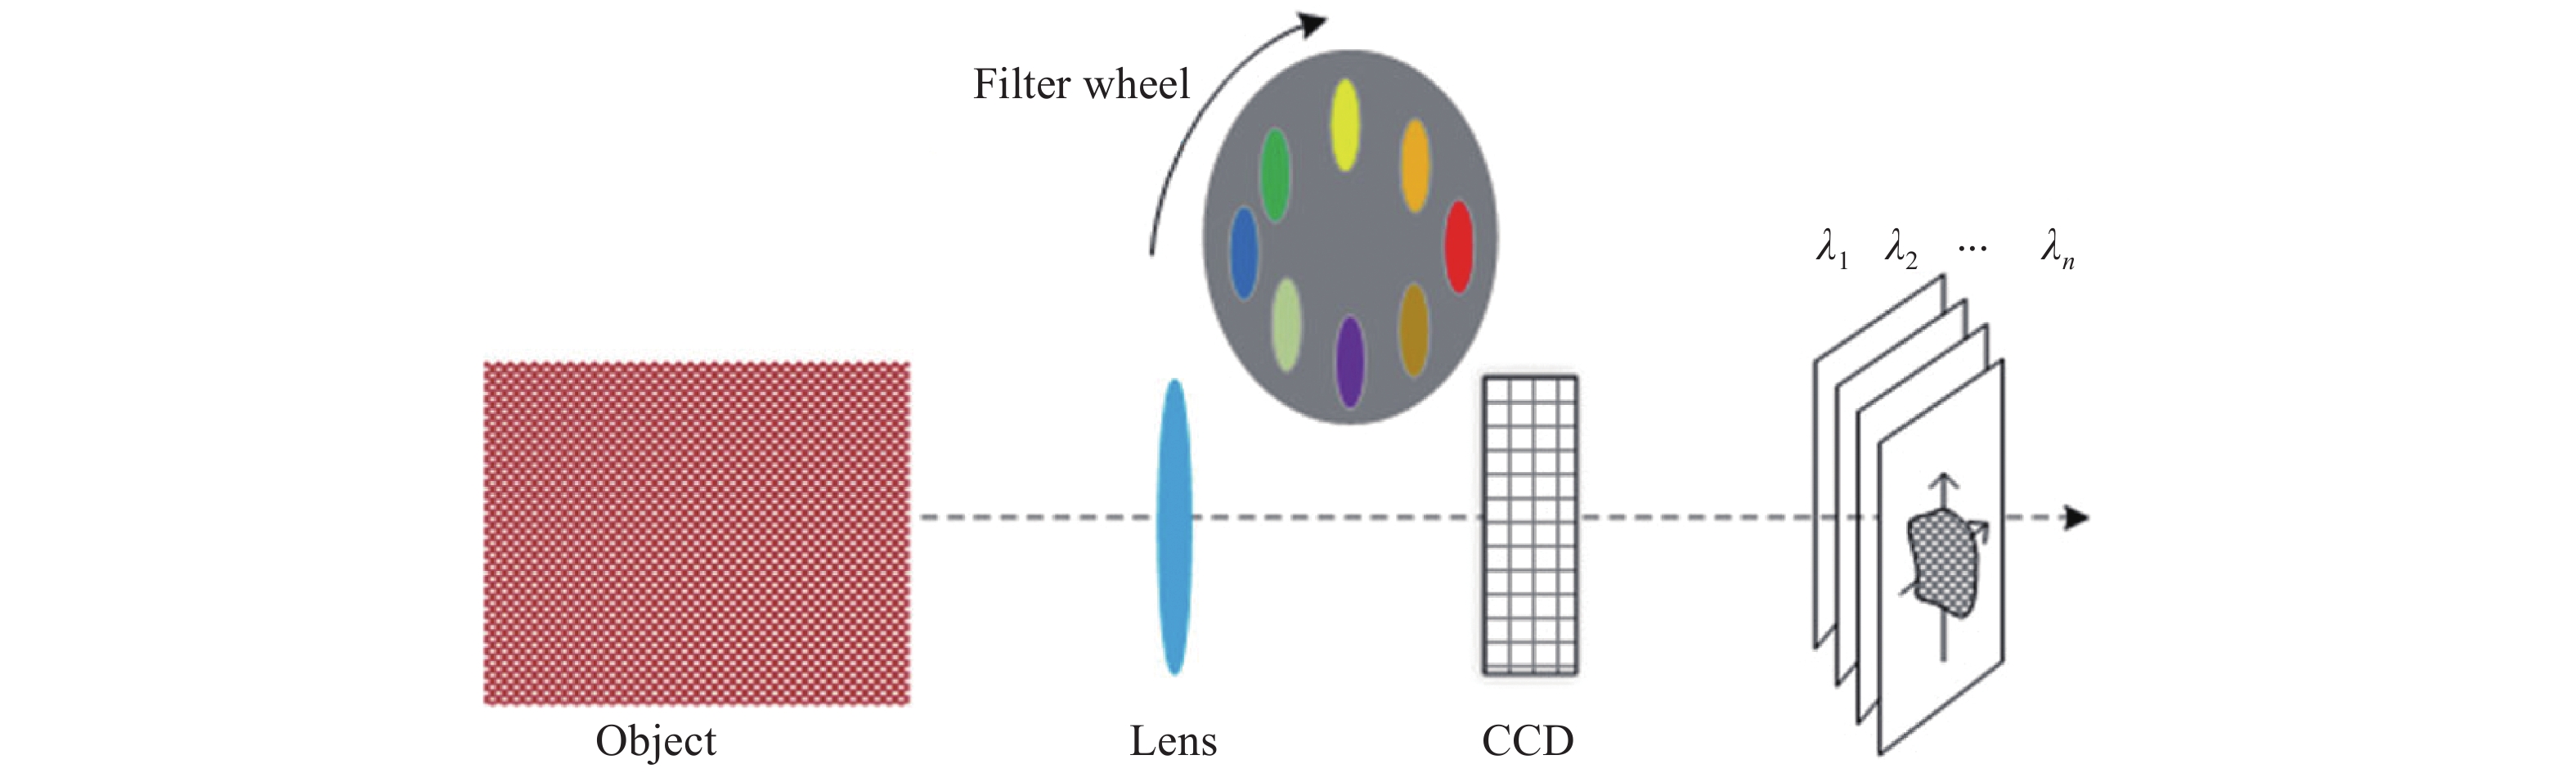 Structure diagram of rotating filter imaging spectrometer